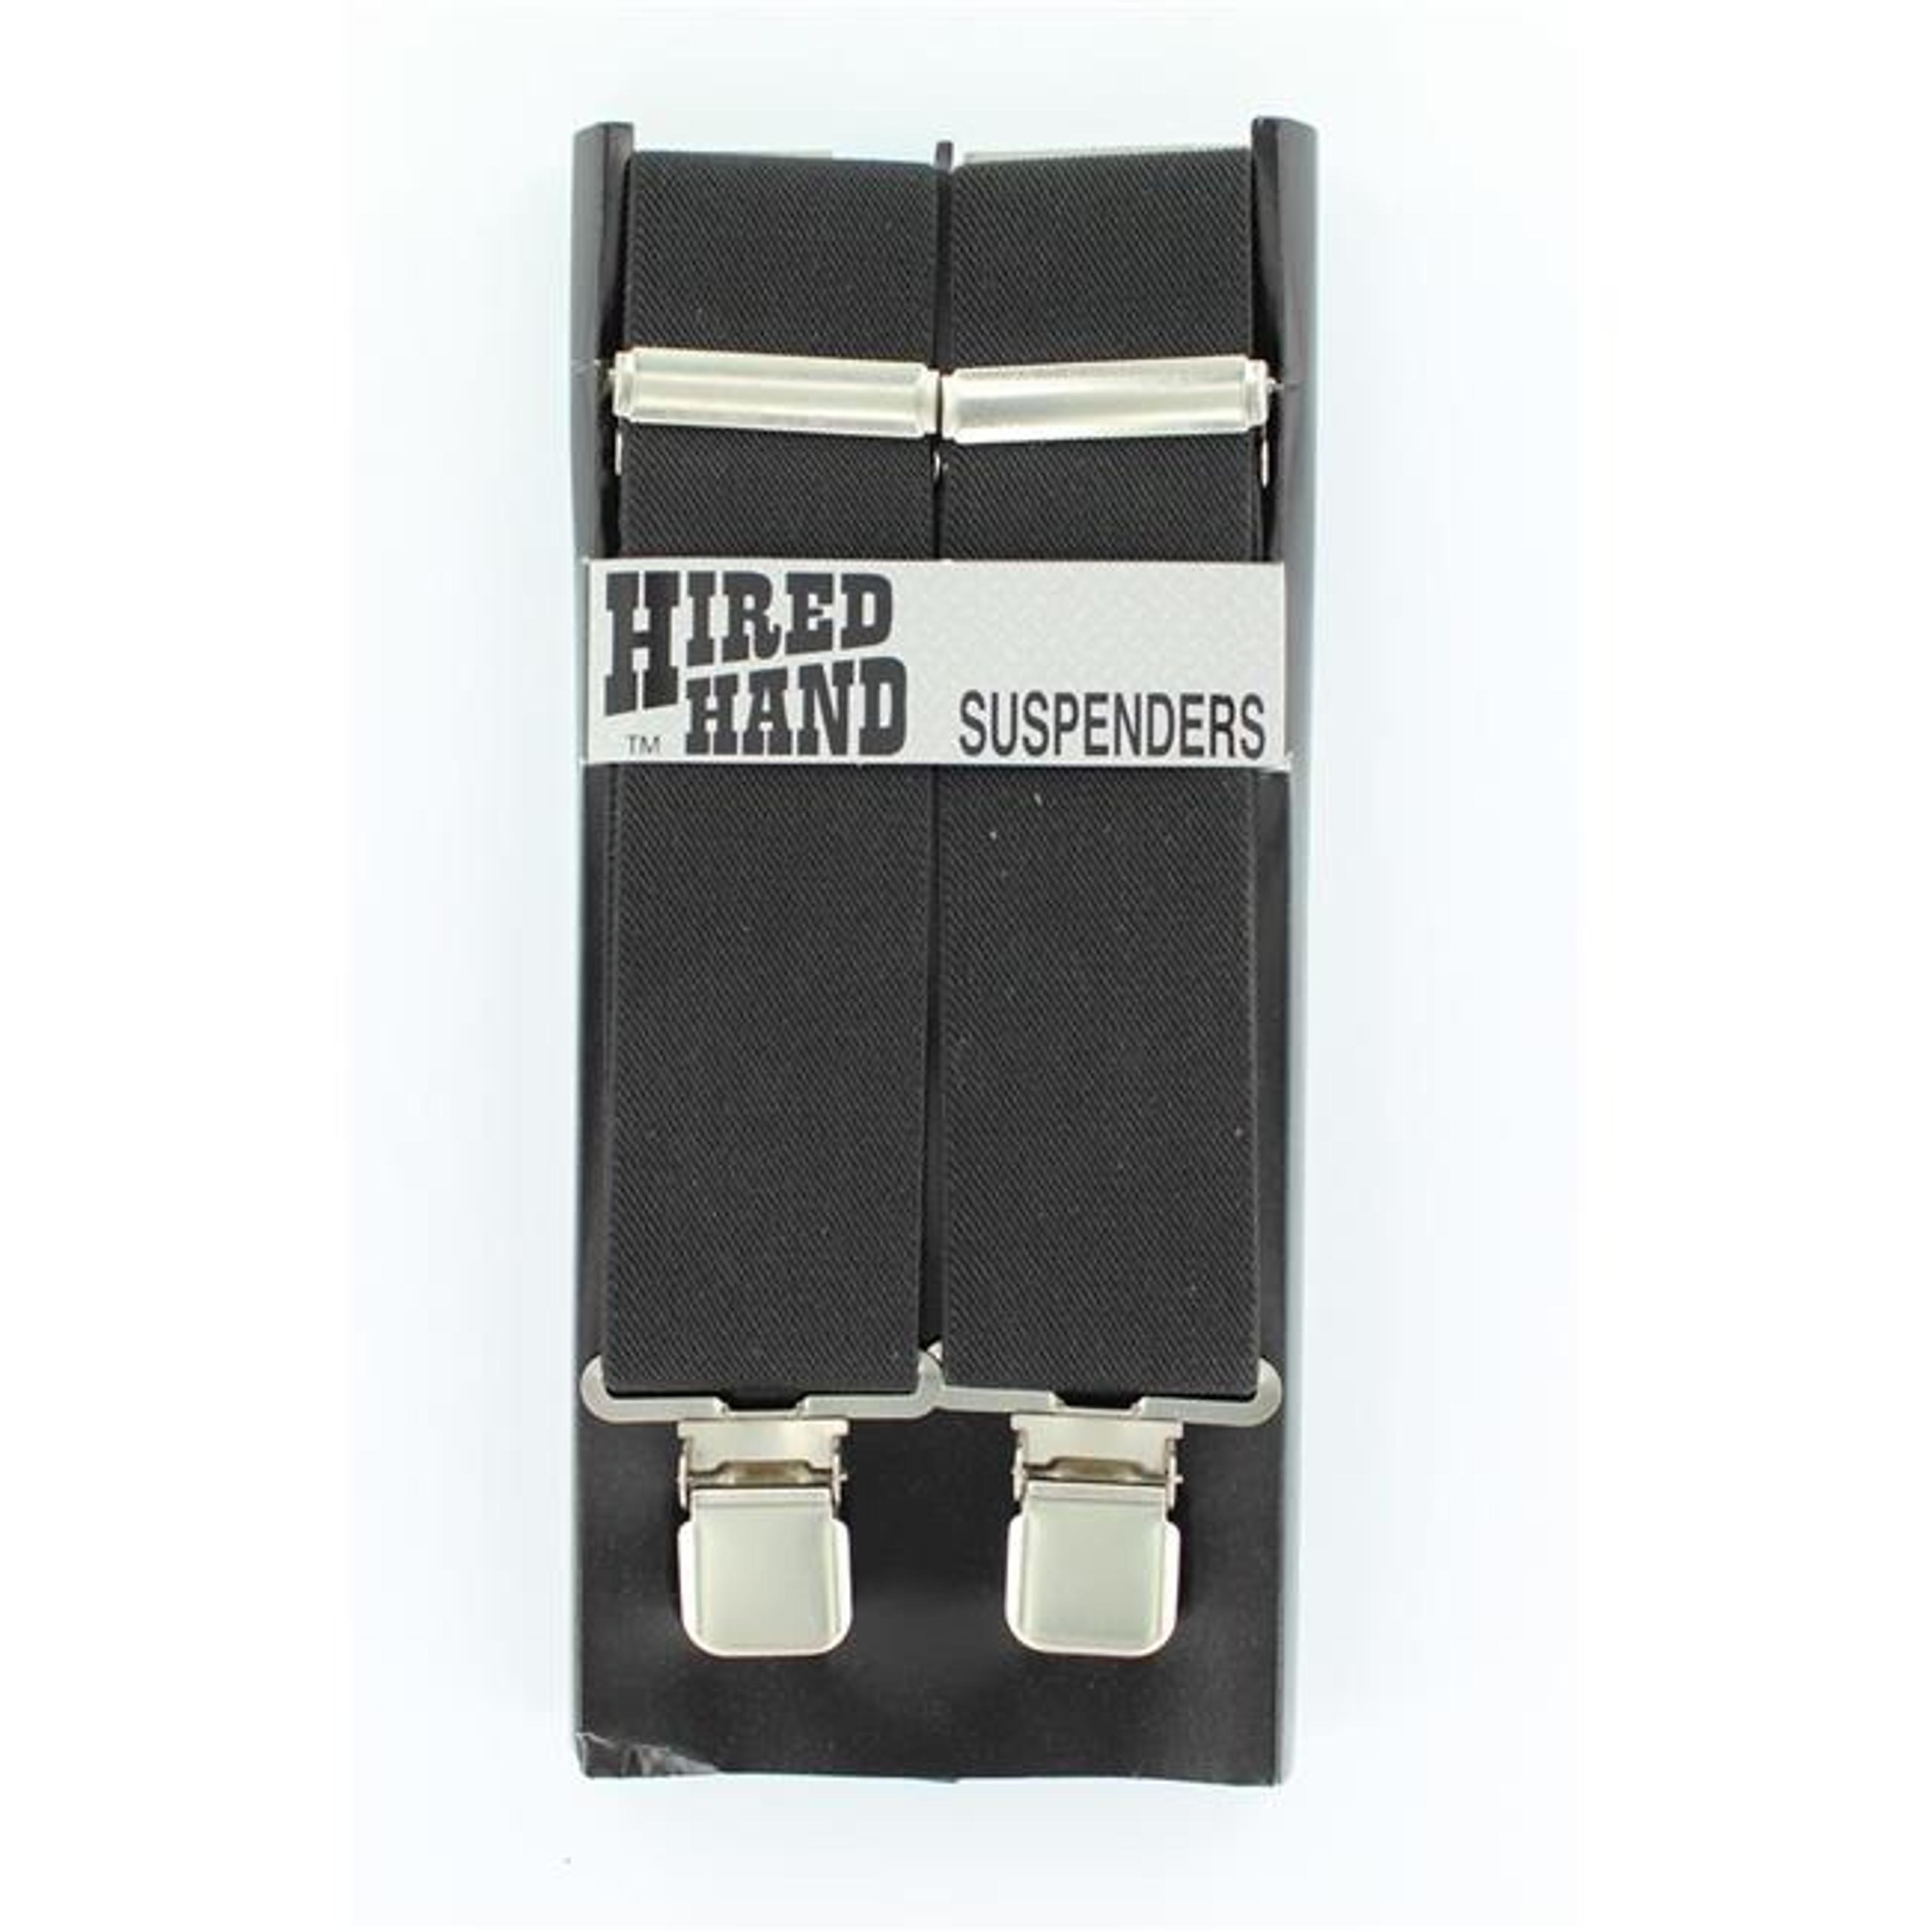  Suspenders